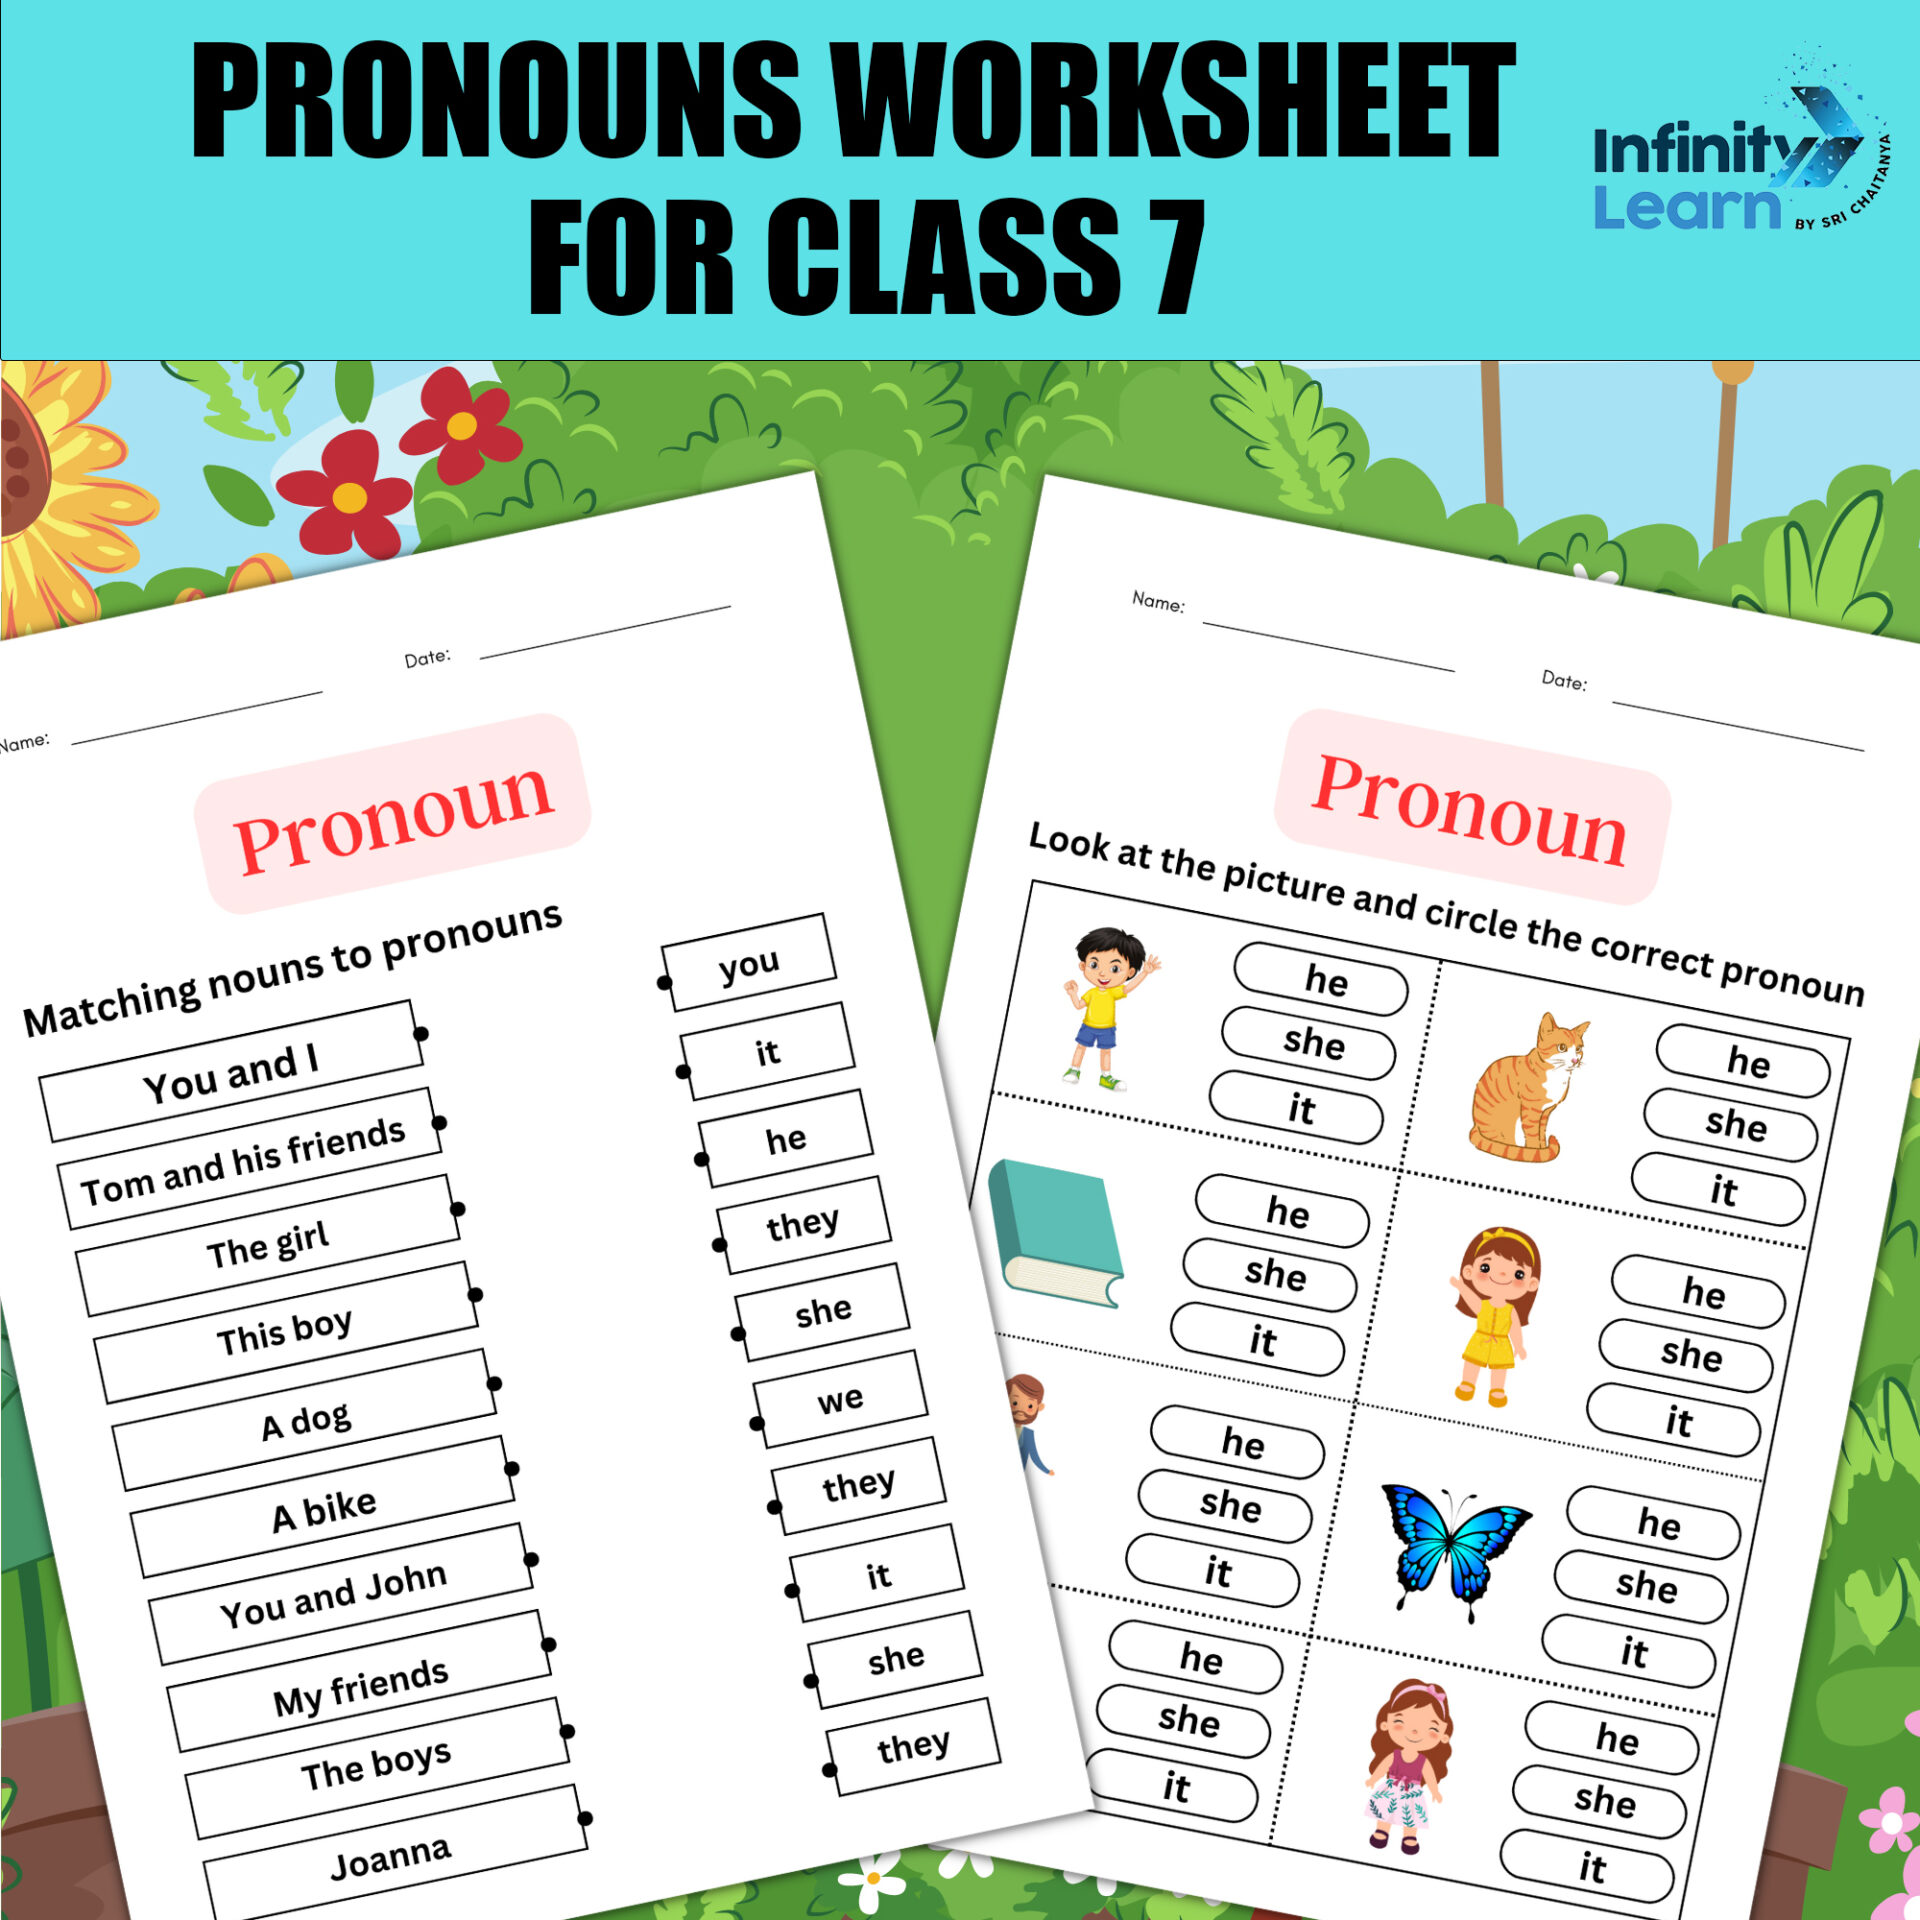 Pronouns Worksheet for Class 7 